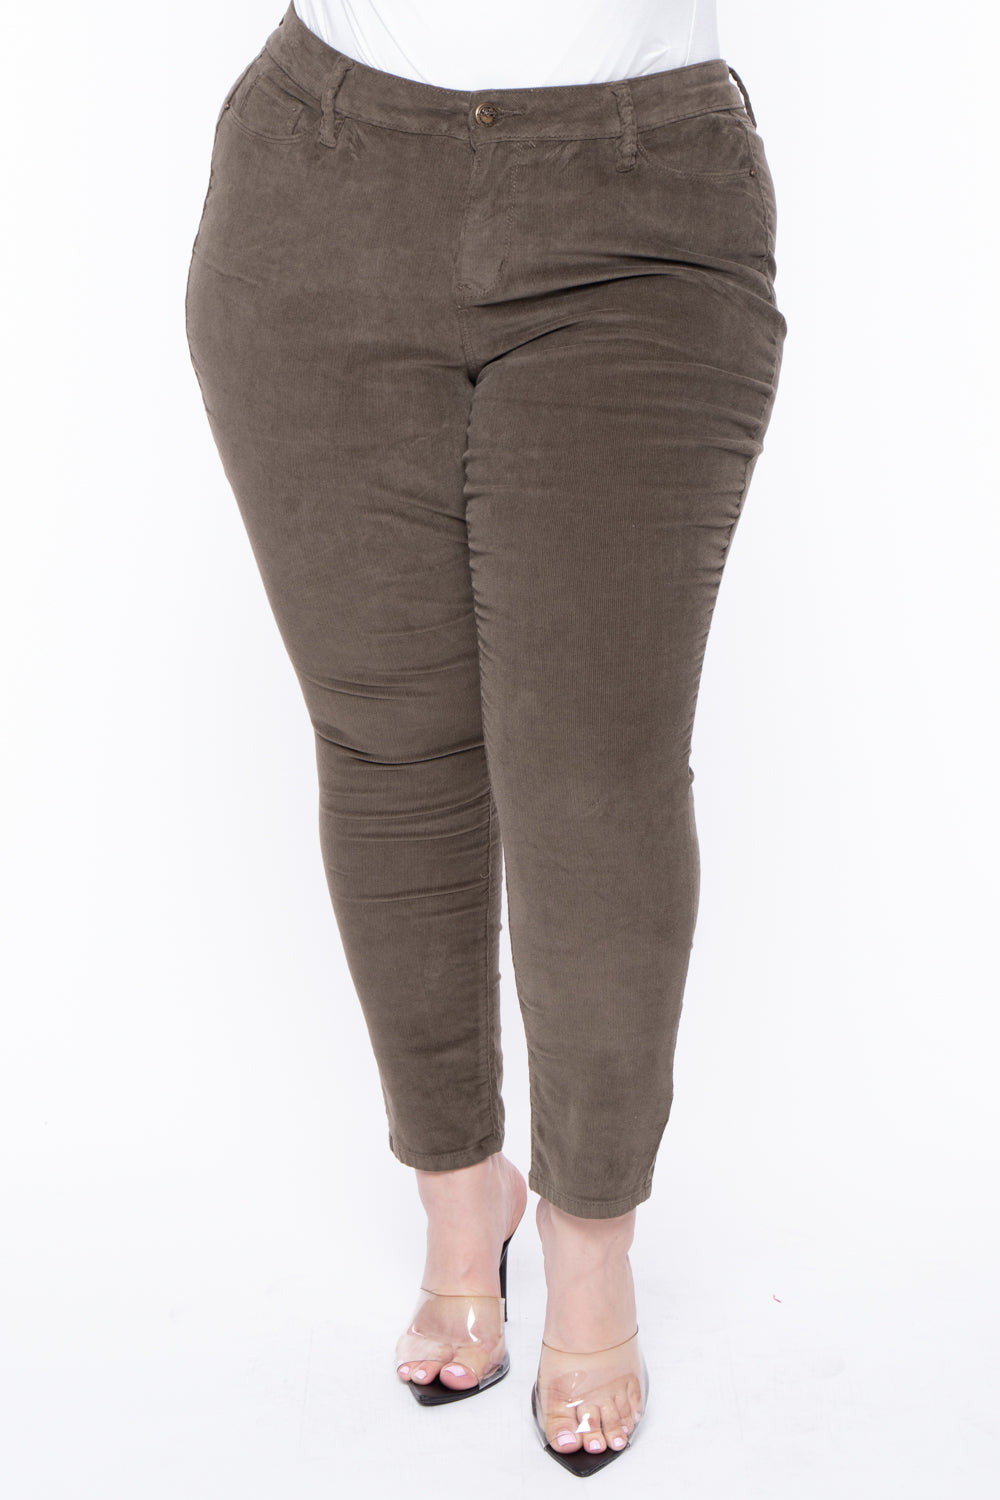 Plus Size YMI Corduroy Skinny Pants - Olive - Curvy Sense